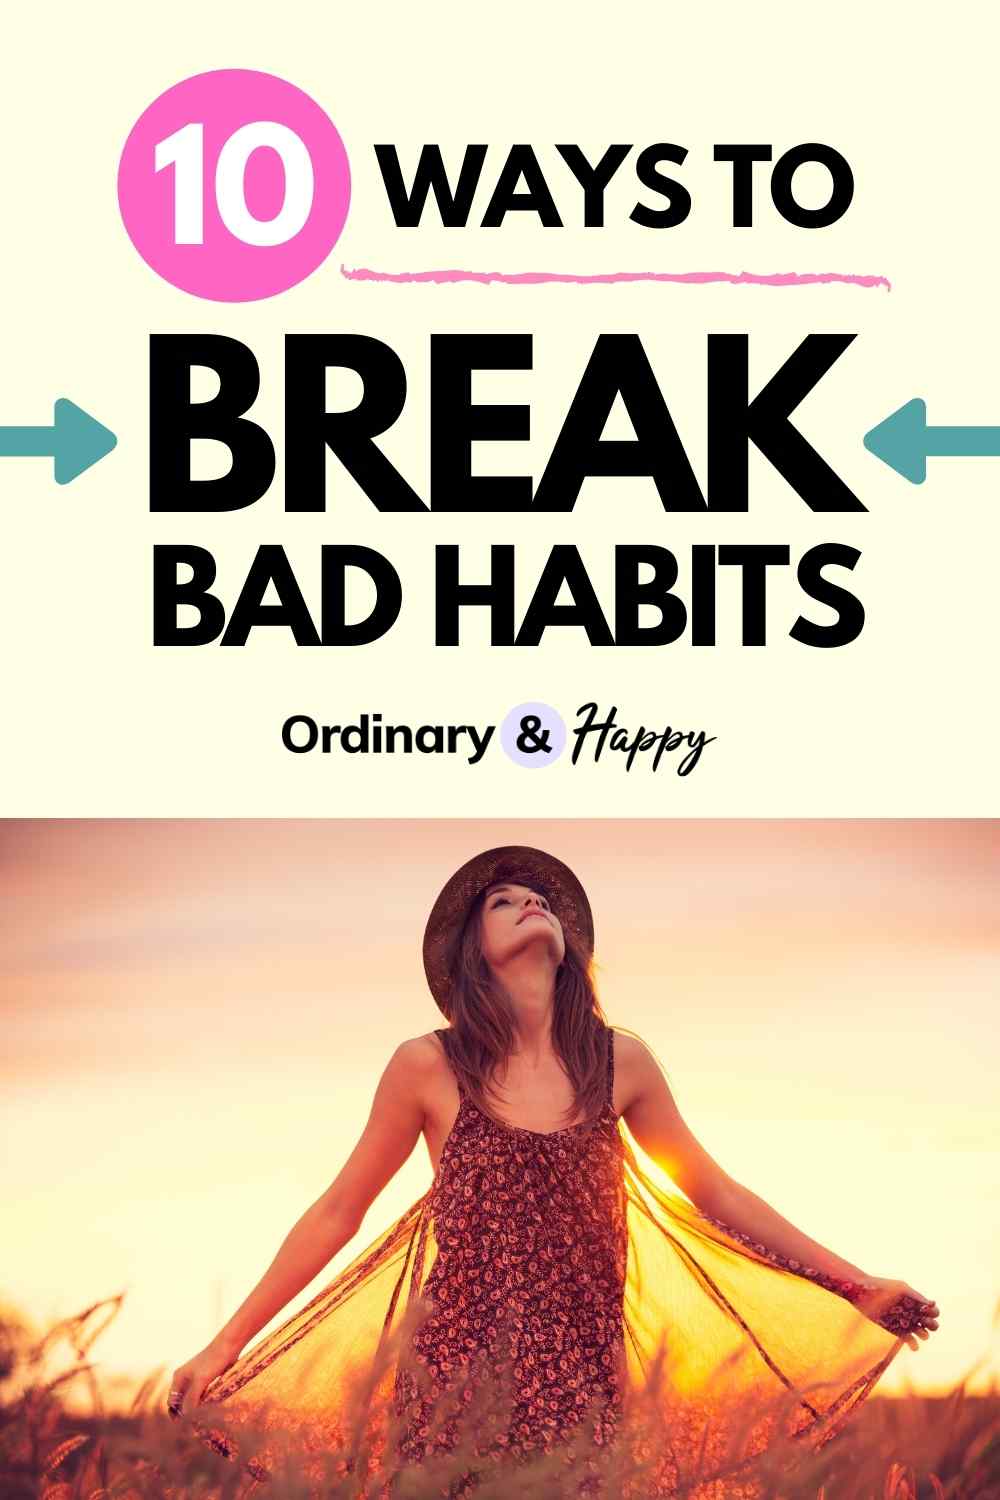 10 ways to break bad habits